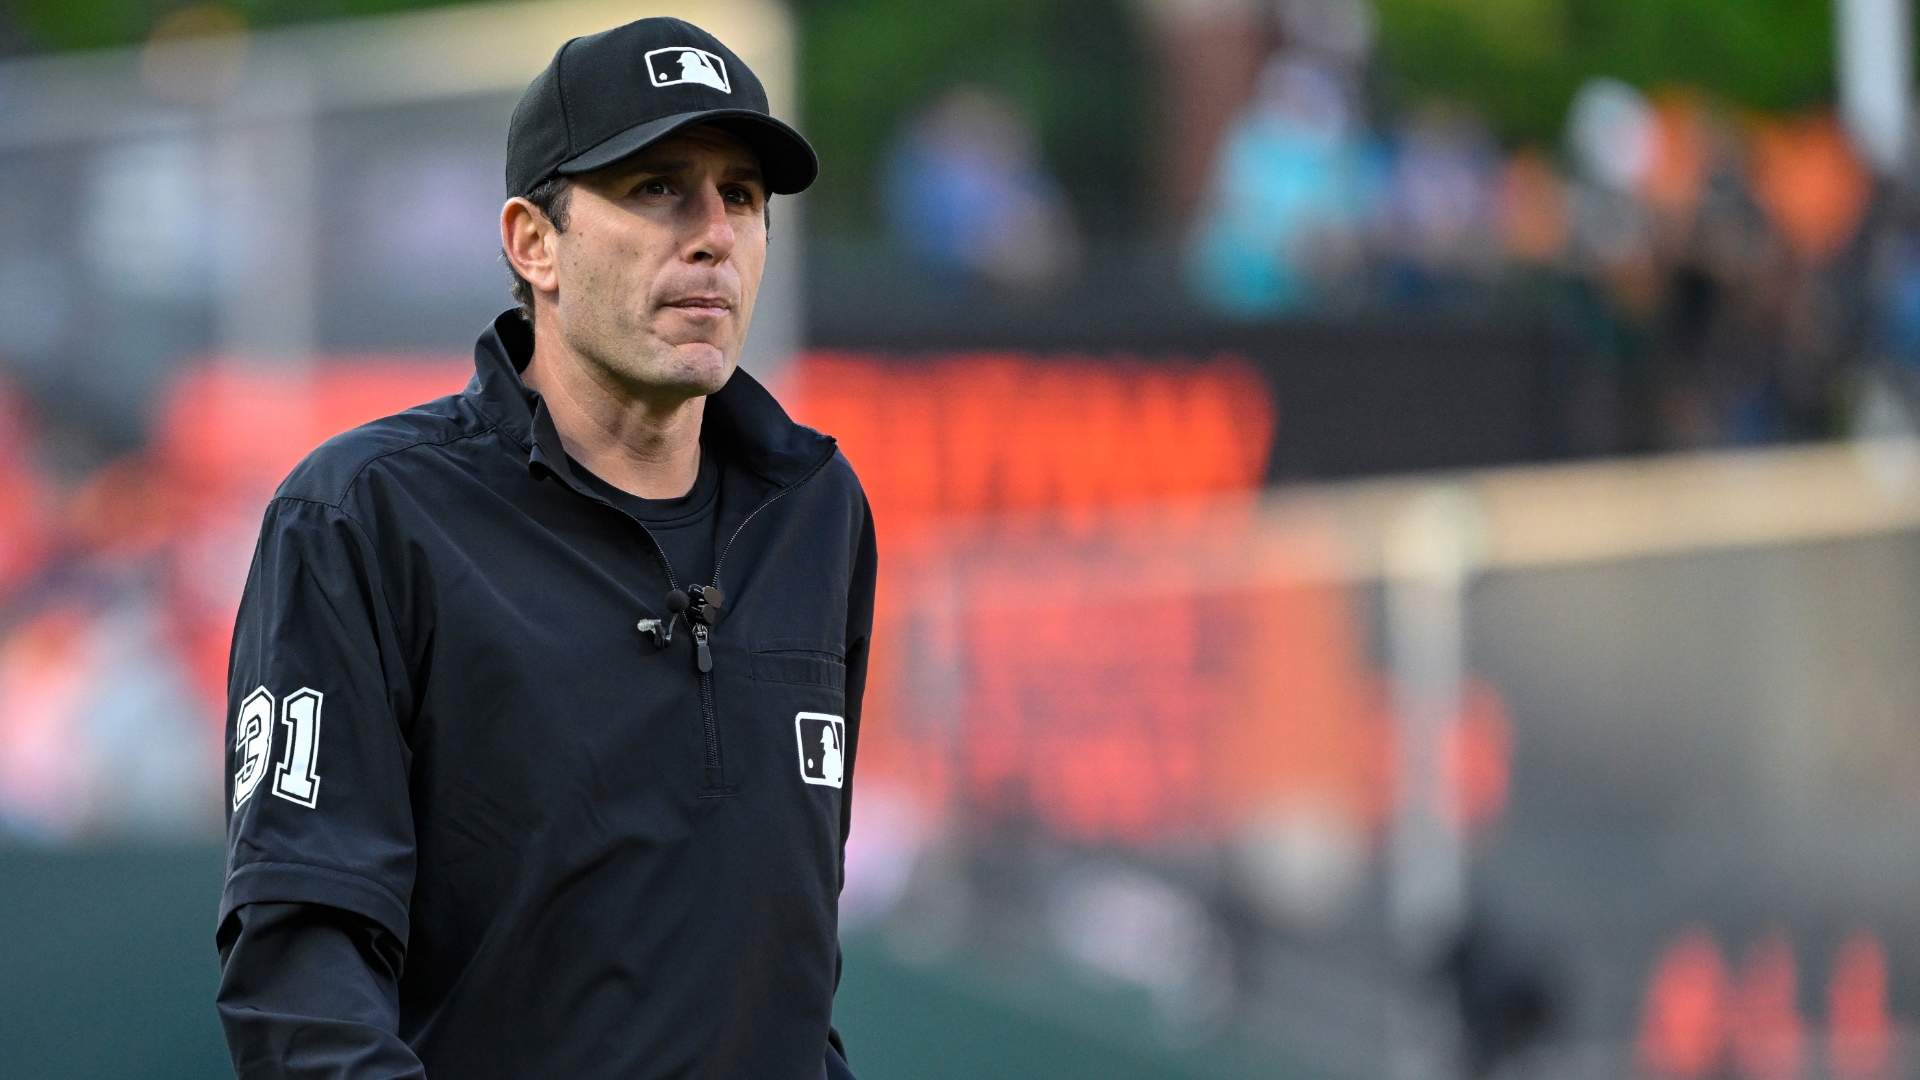 MLB disciplines umpire for violating gambling rules